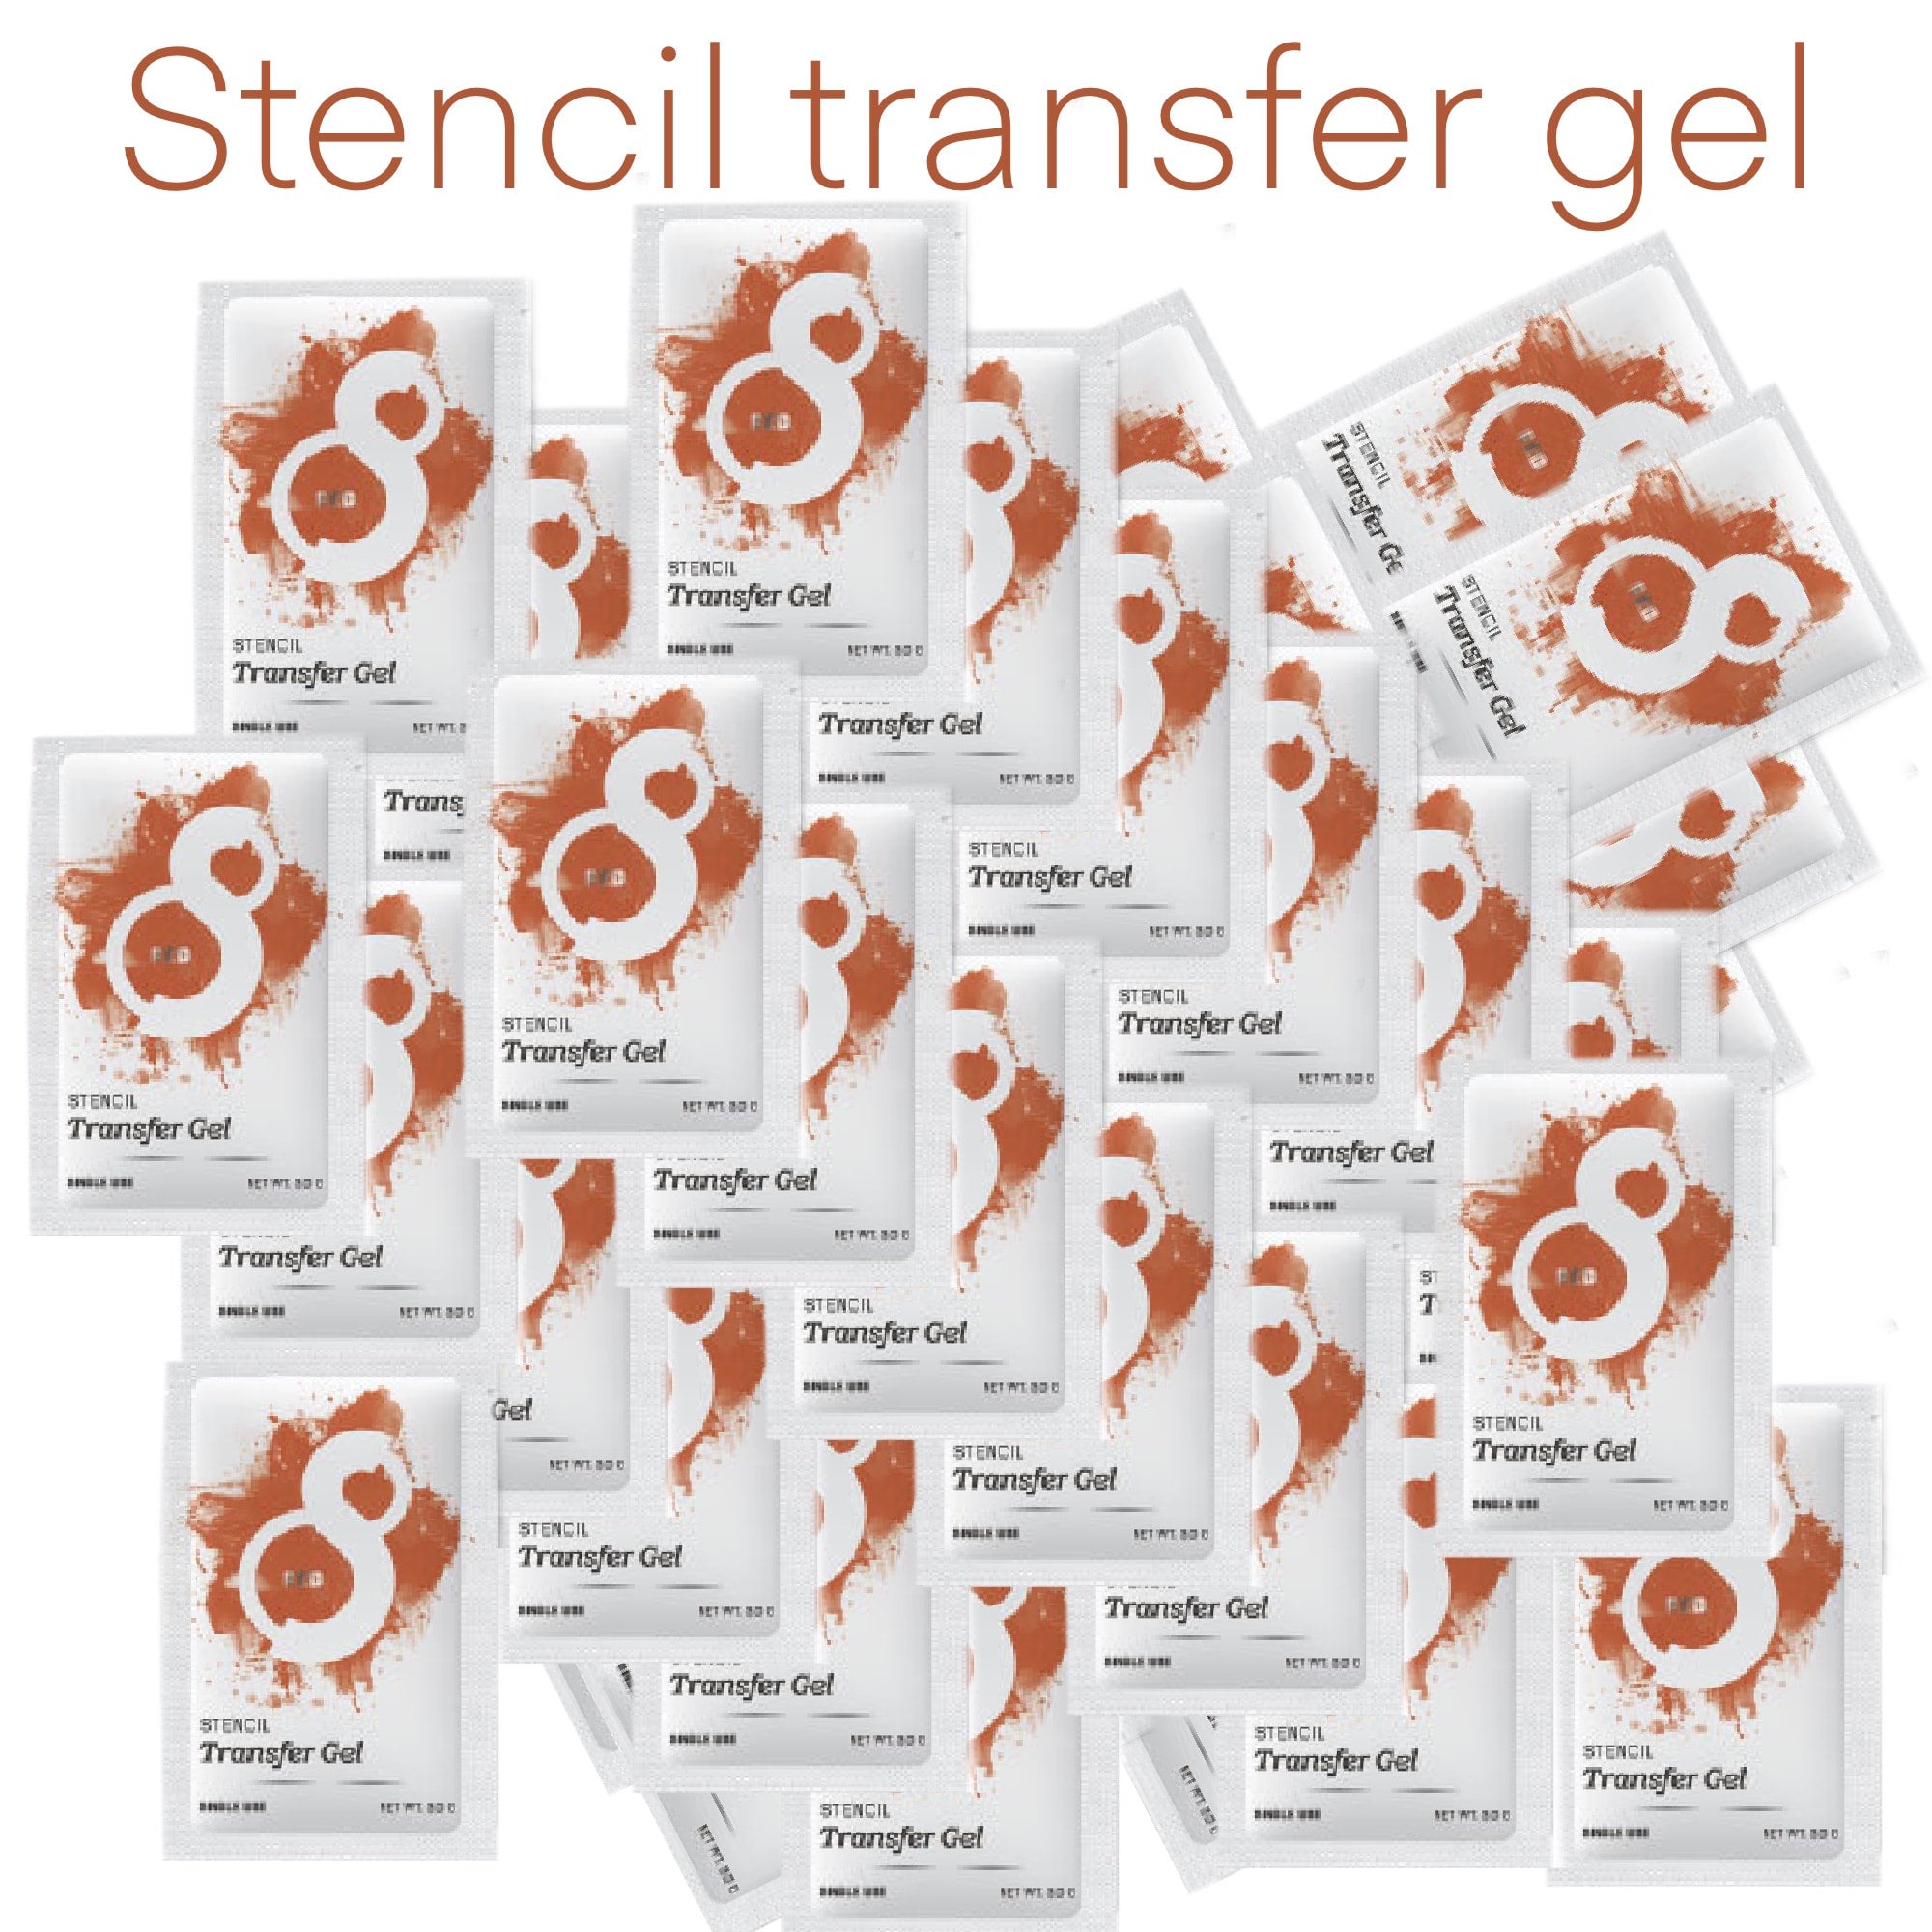 S8 Stencil Transfer Gel, 8oz - Perpetual Permanent Makeup